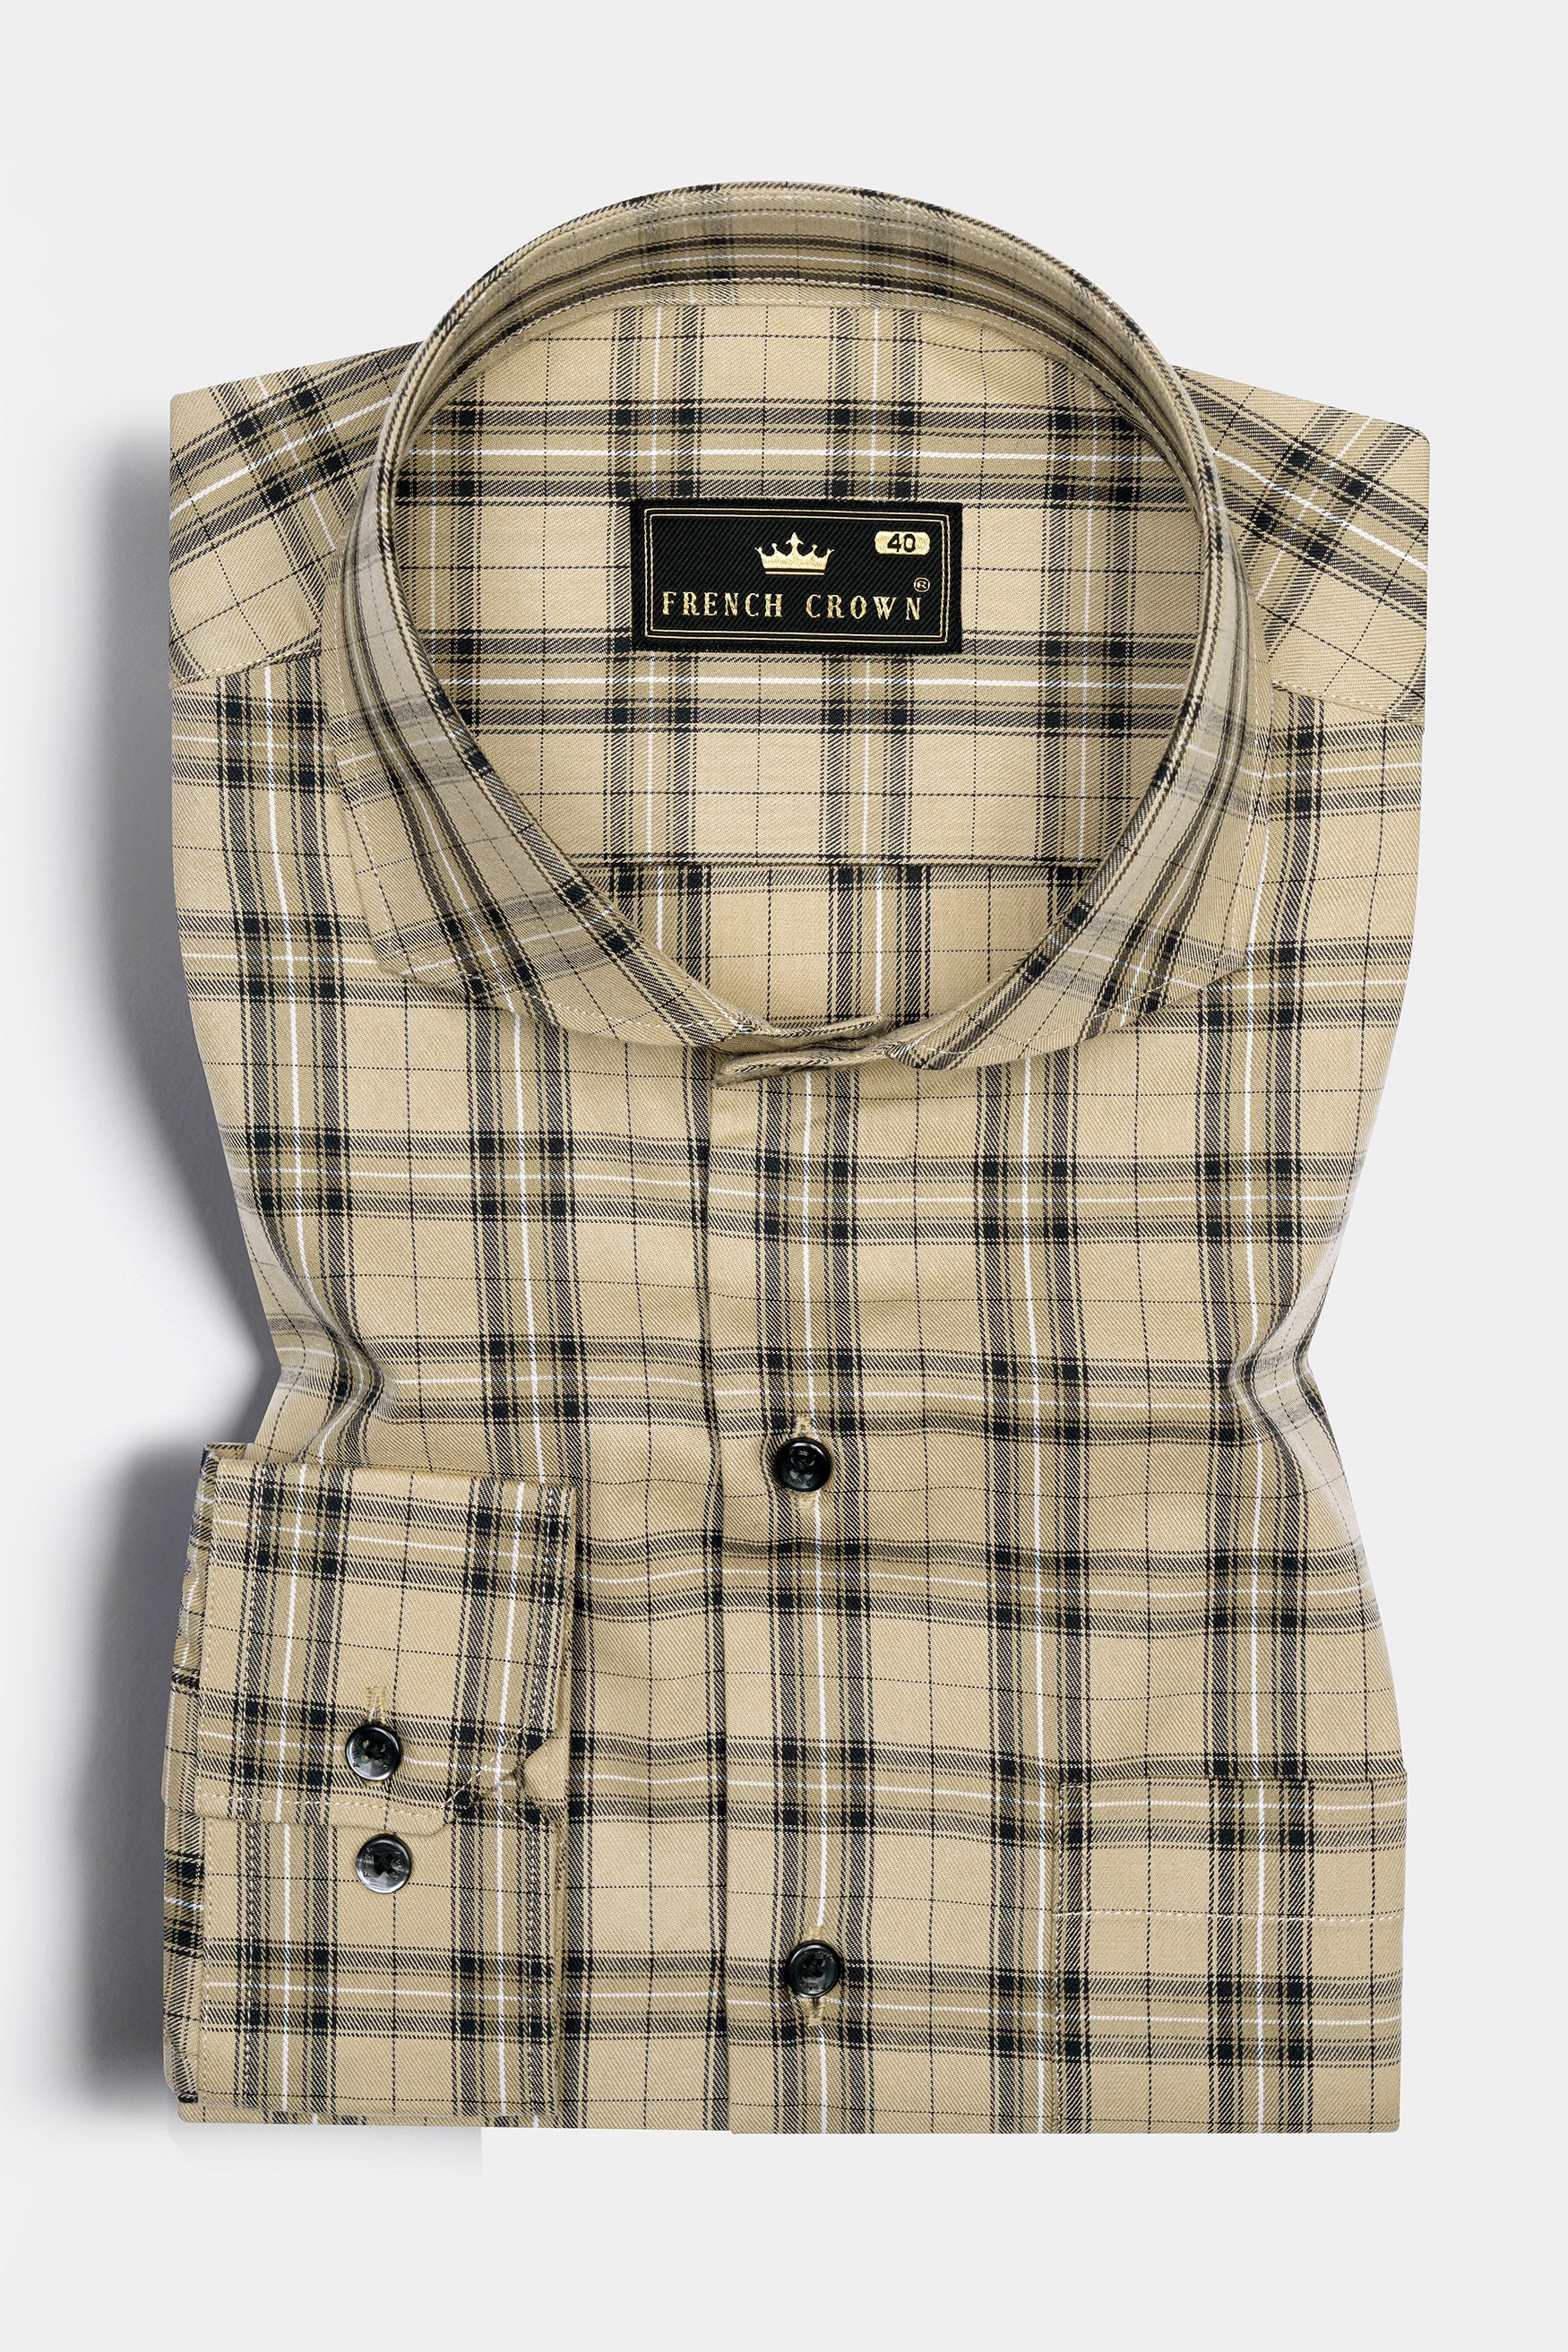 Stone Brown And Tealish Black Twill Checked  Premium Cotton Shirt